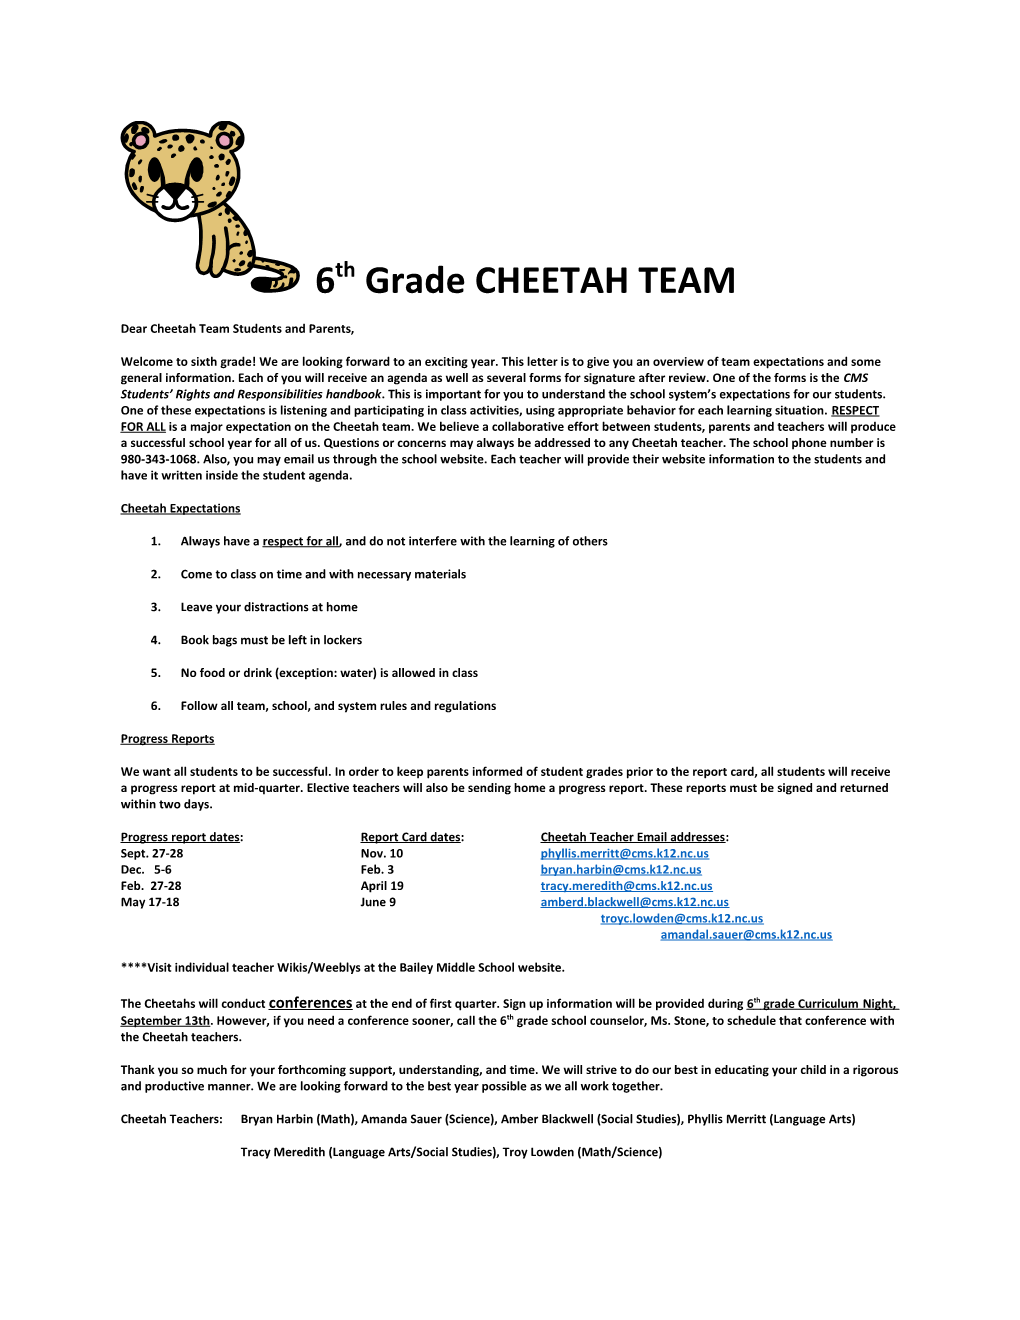 Dear Cheetah Team Students and Parents